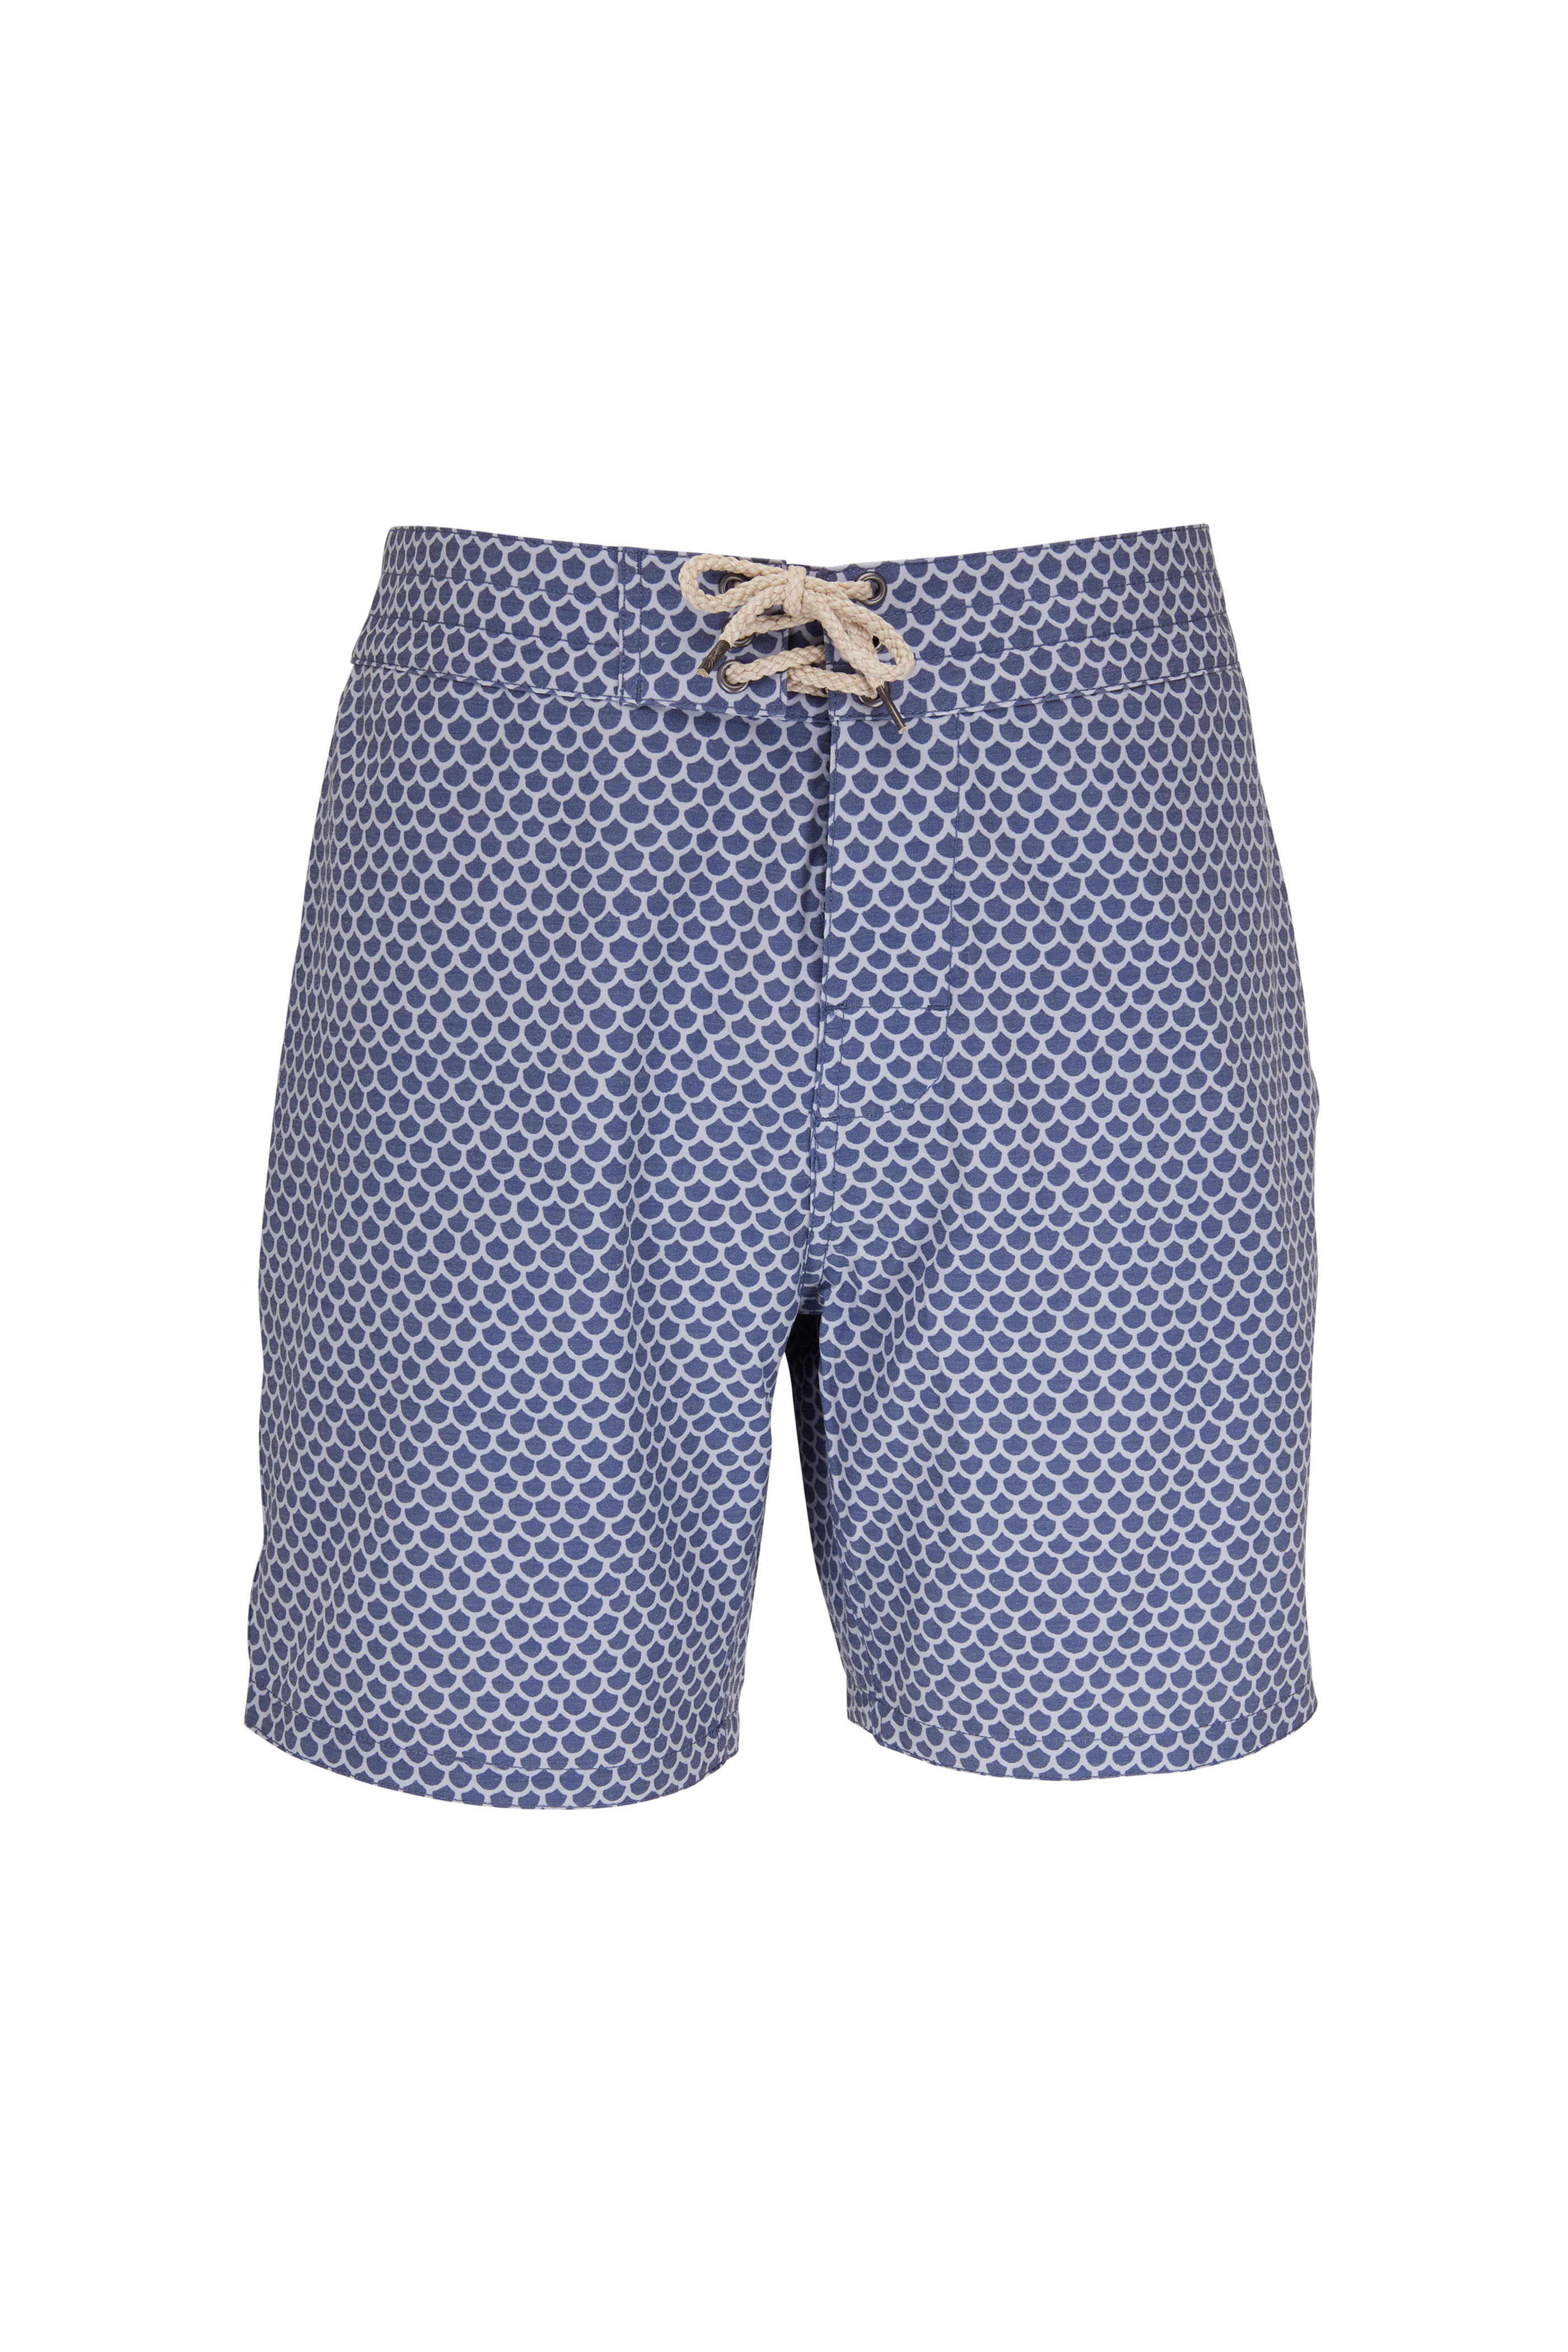 Faherty Brand - Blue Fish Scale Batik Classic Board Shorts